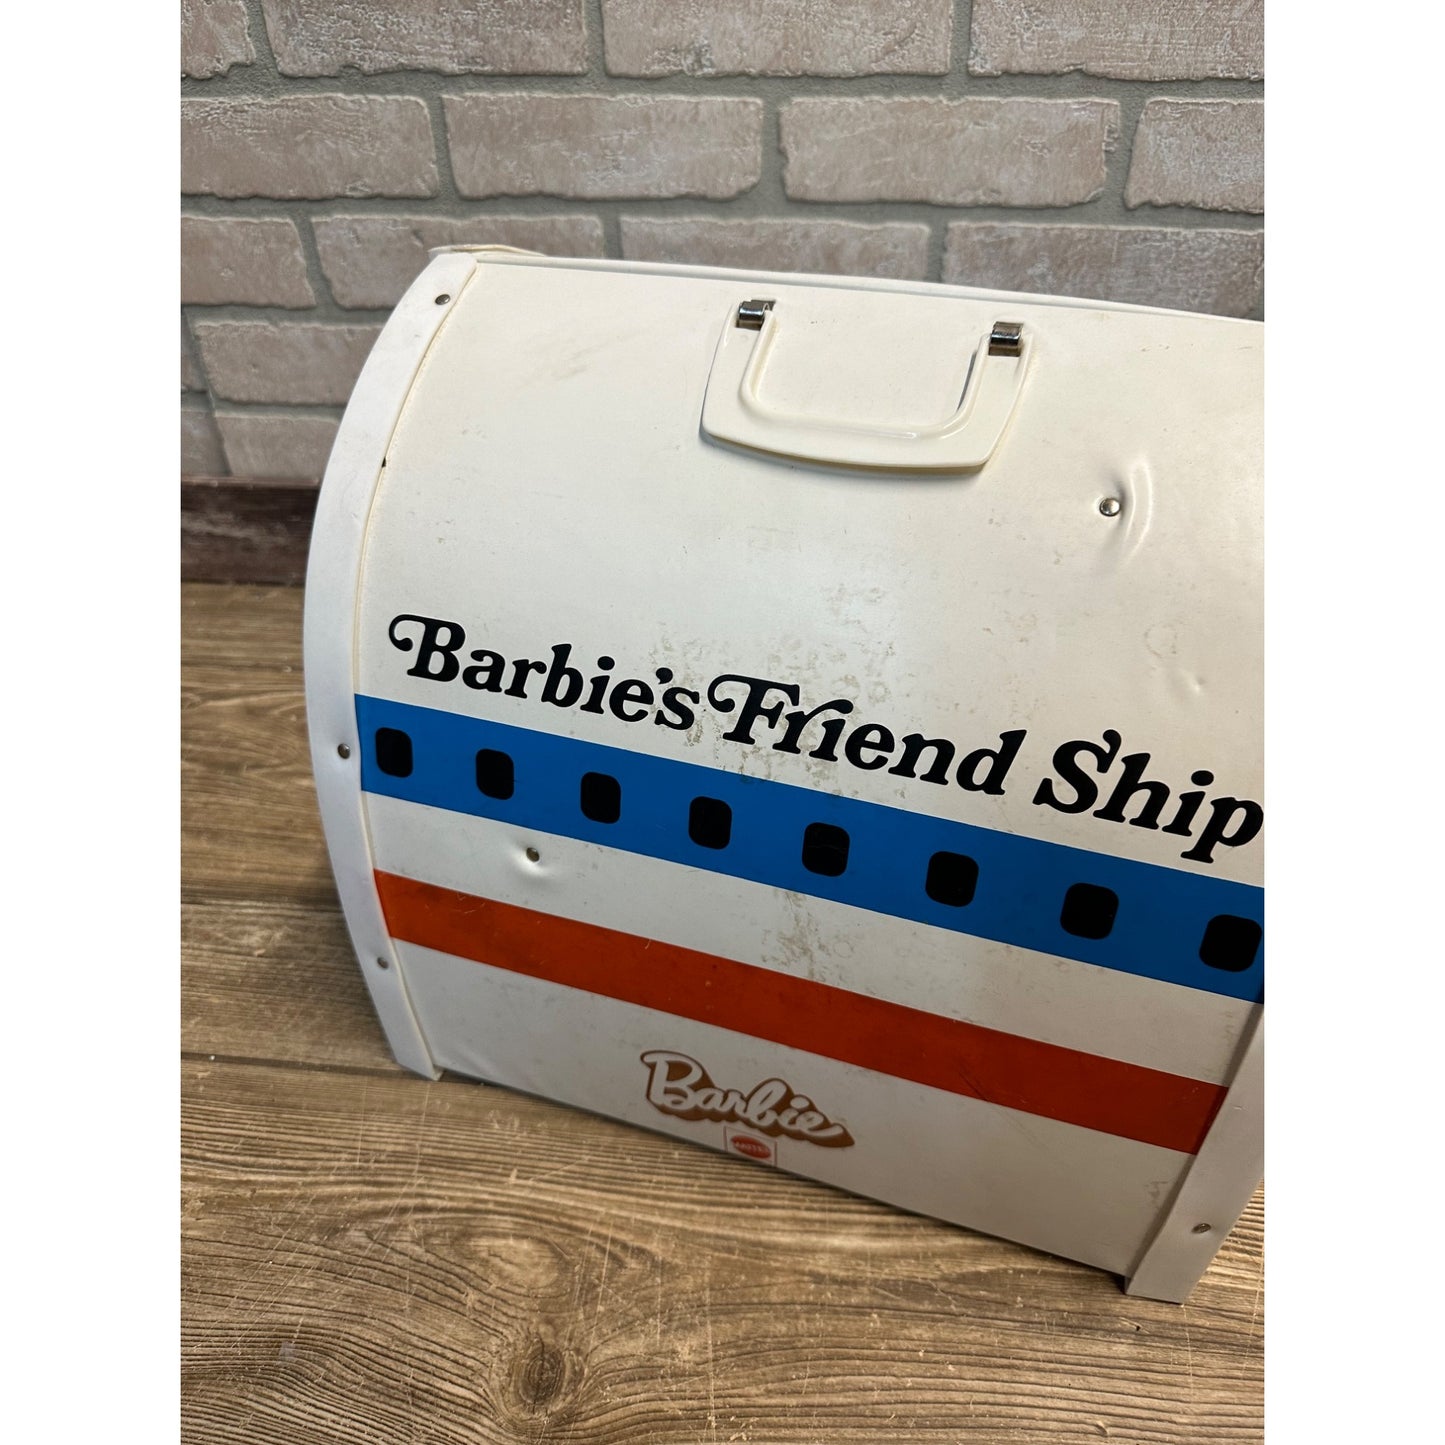 VINTAGE BARBIE FRIEND SHIP AIRPLANE CASE 1970S MATTEL #8639 UNITED AIRLINES